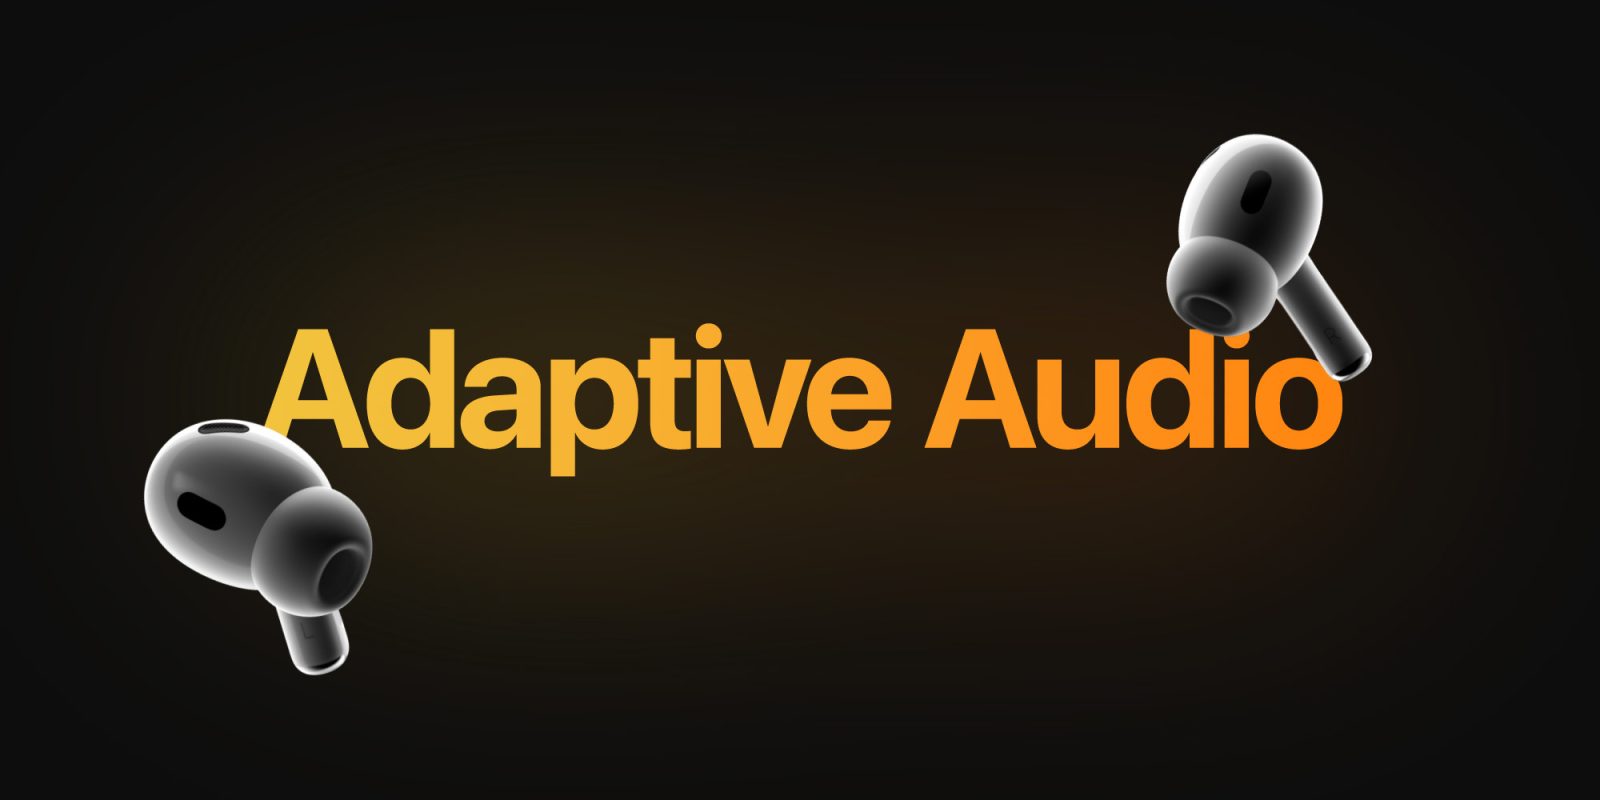 turn on AirPods Pro Adaptive Audio